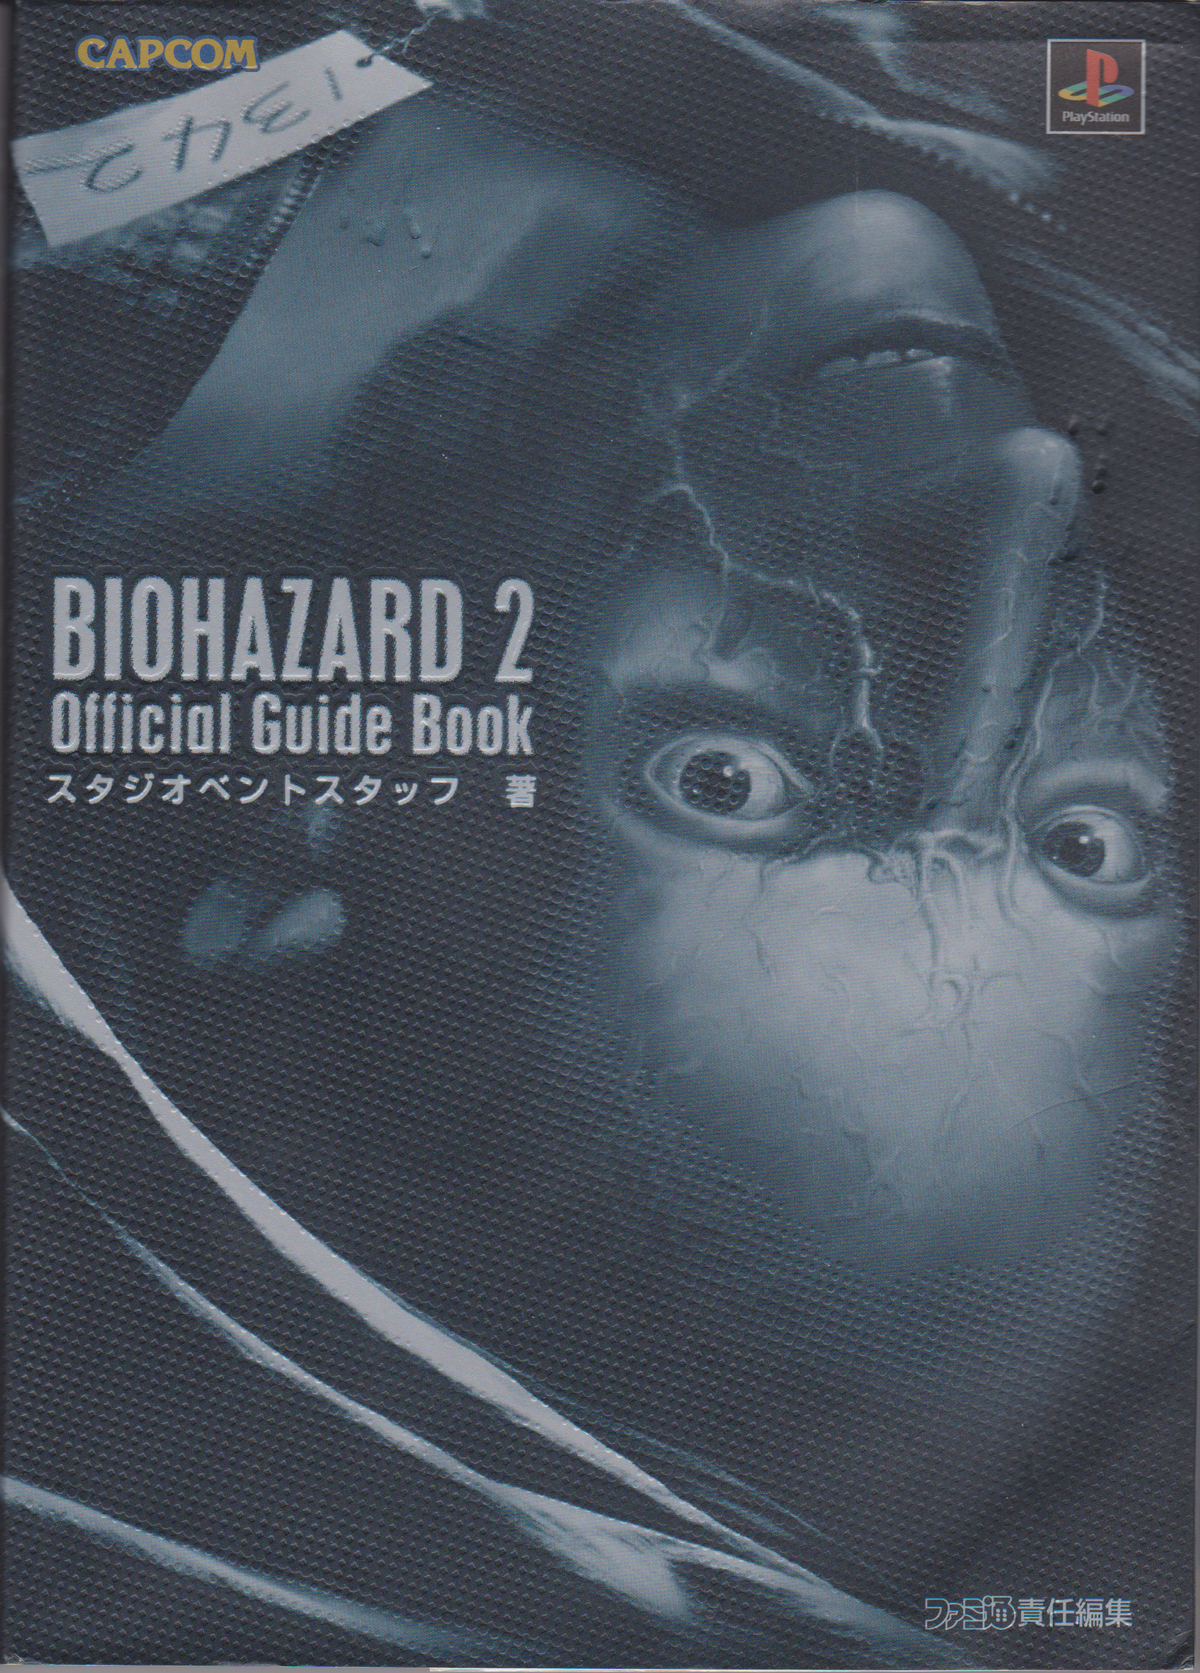 BIOHAZARD 2 Official Guide Book | Resident Evil Wiki | Fandom